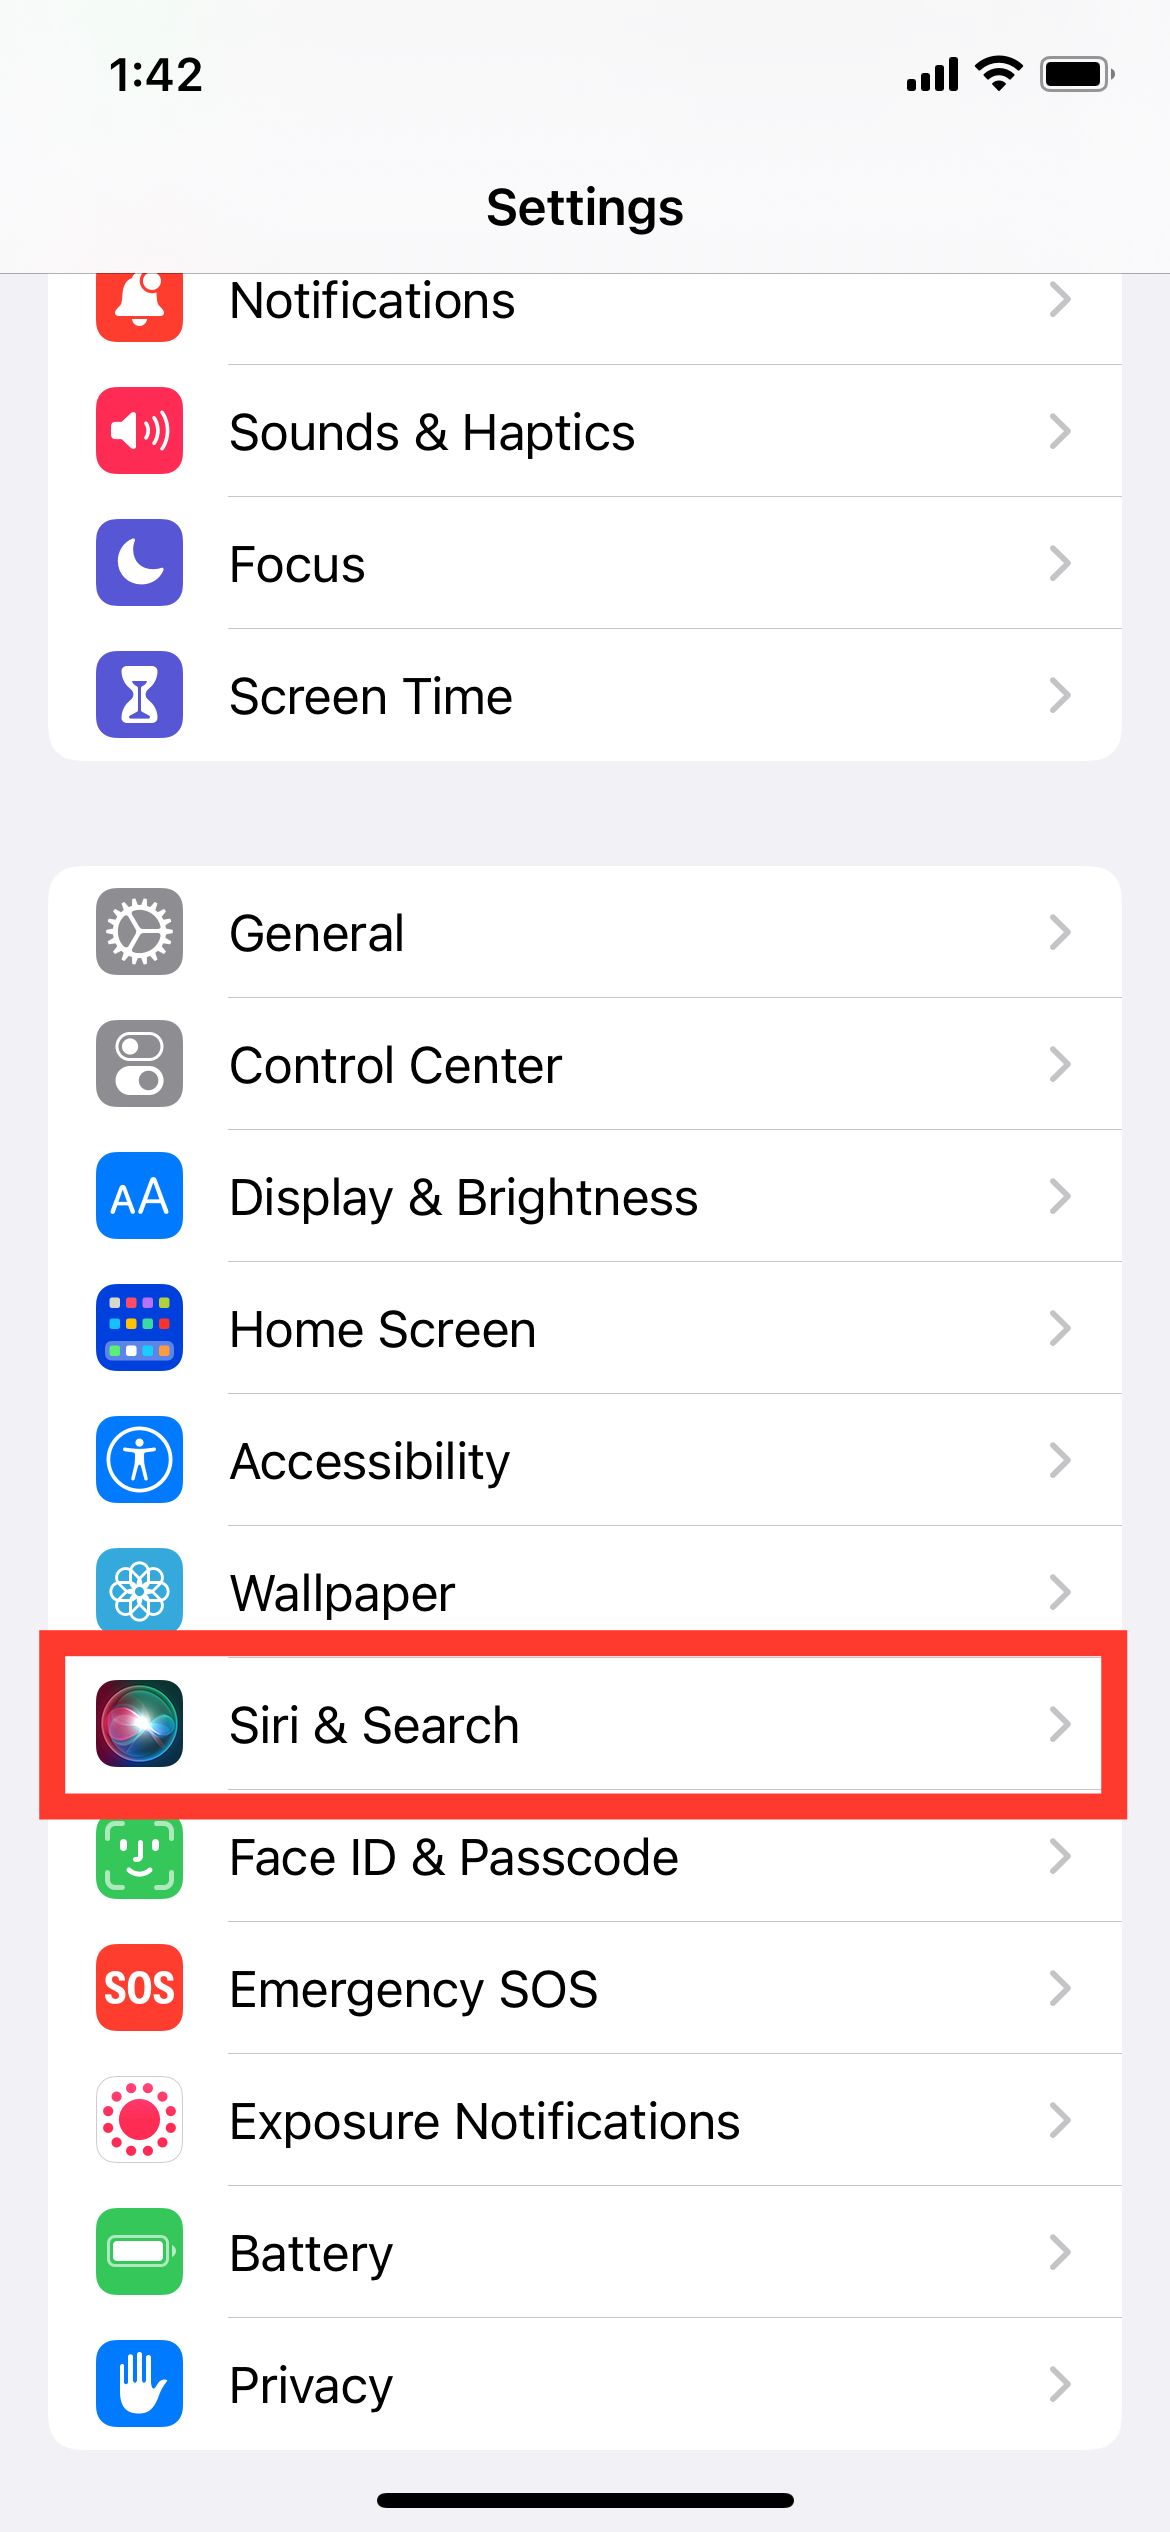 Siri & Search Under Settings